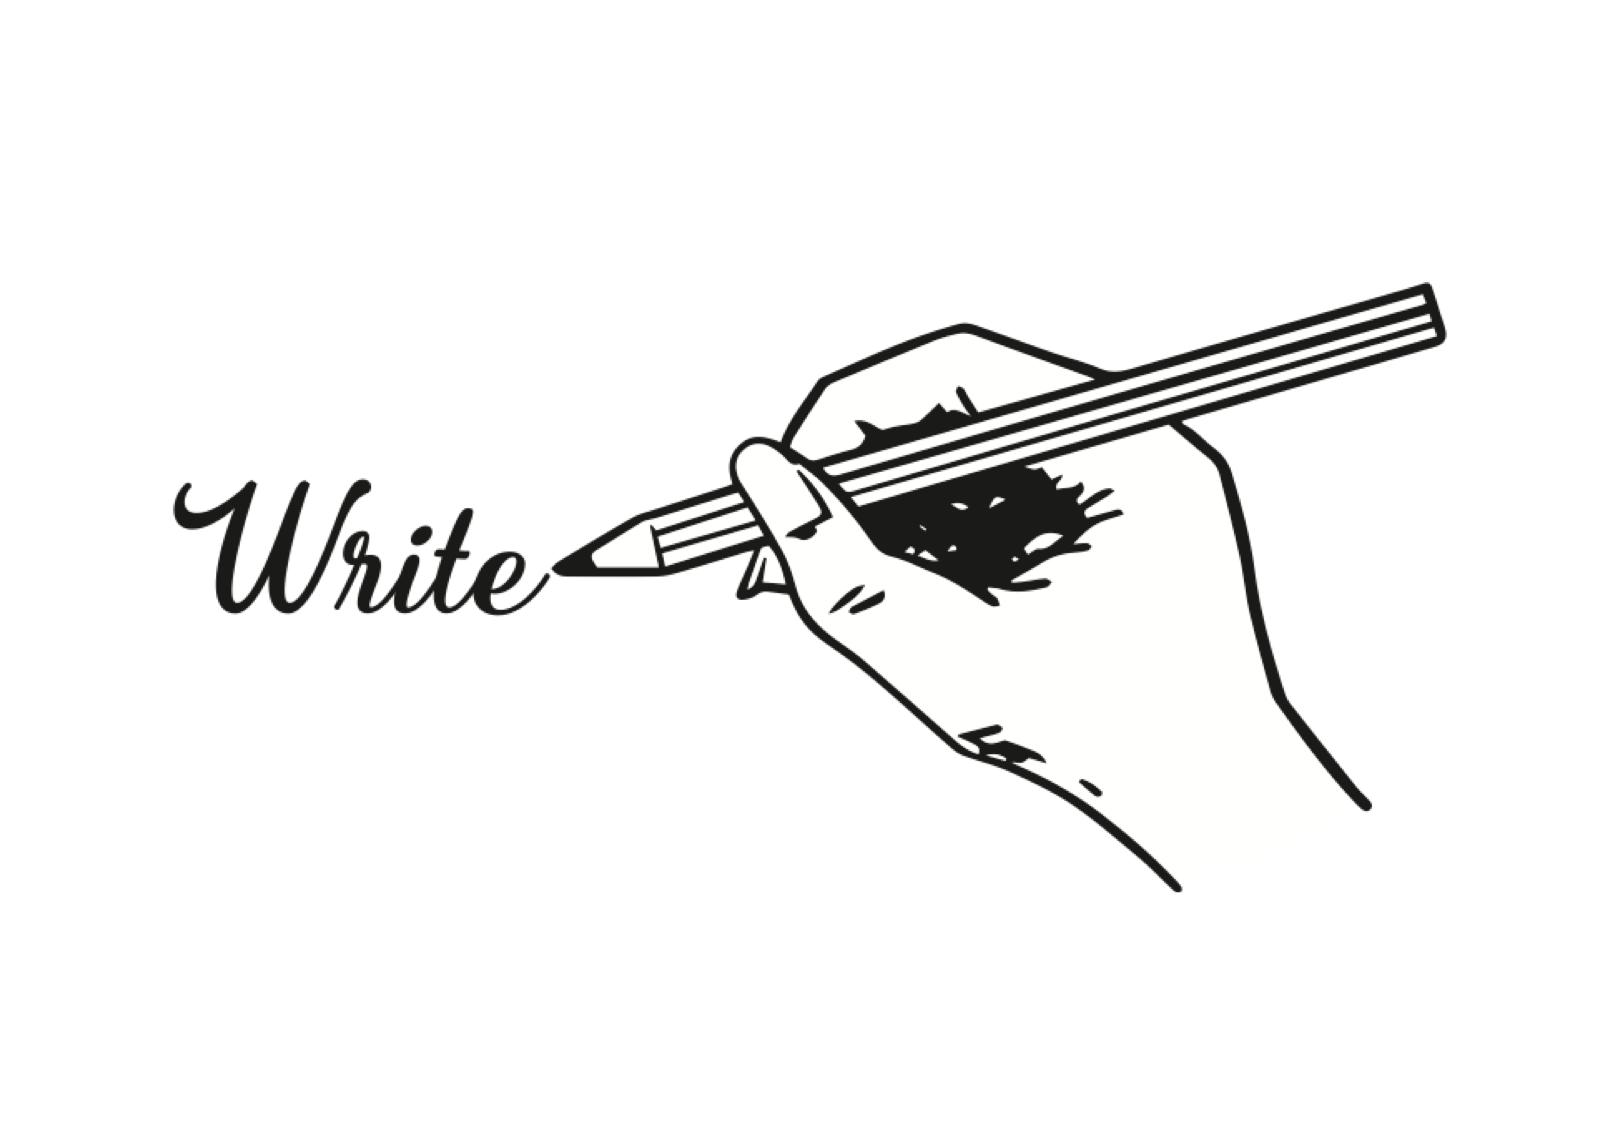 「White」と鉛筆で書くイラスト